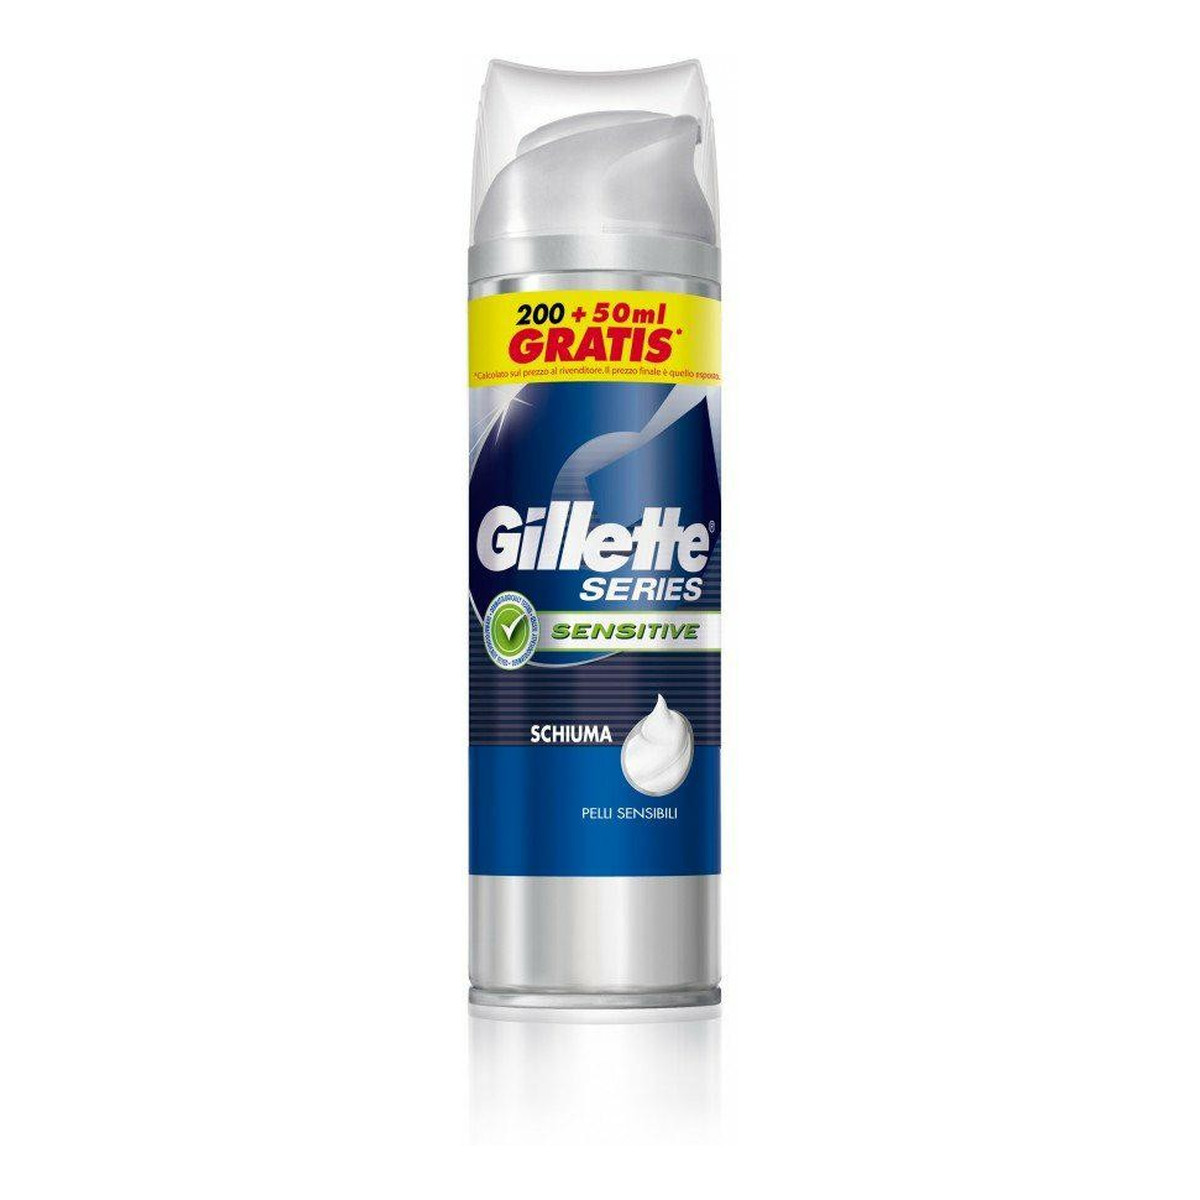 Gillette Series Sensitive pianka do golenia dla skóry wrażliwej 250ml